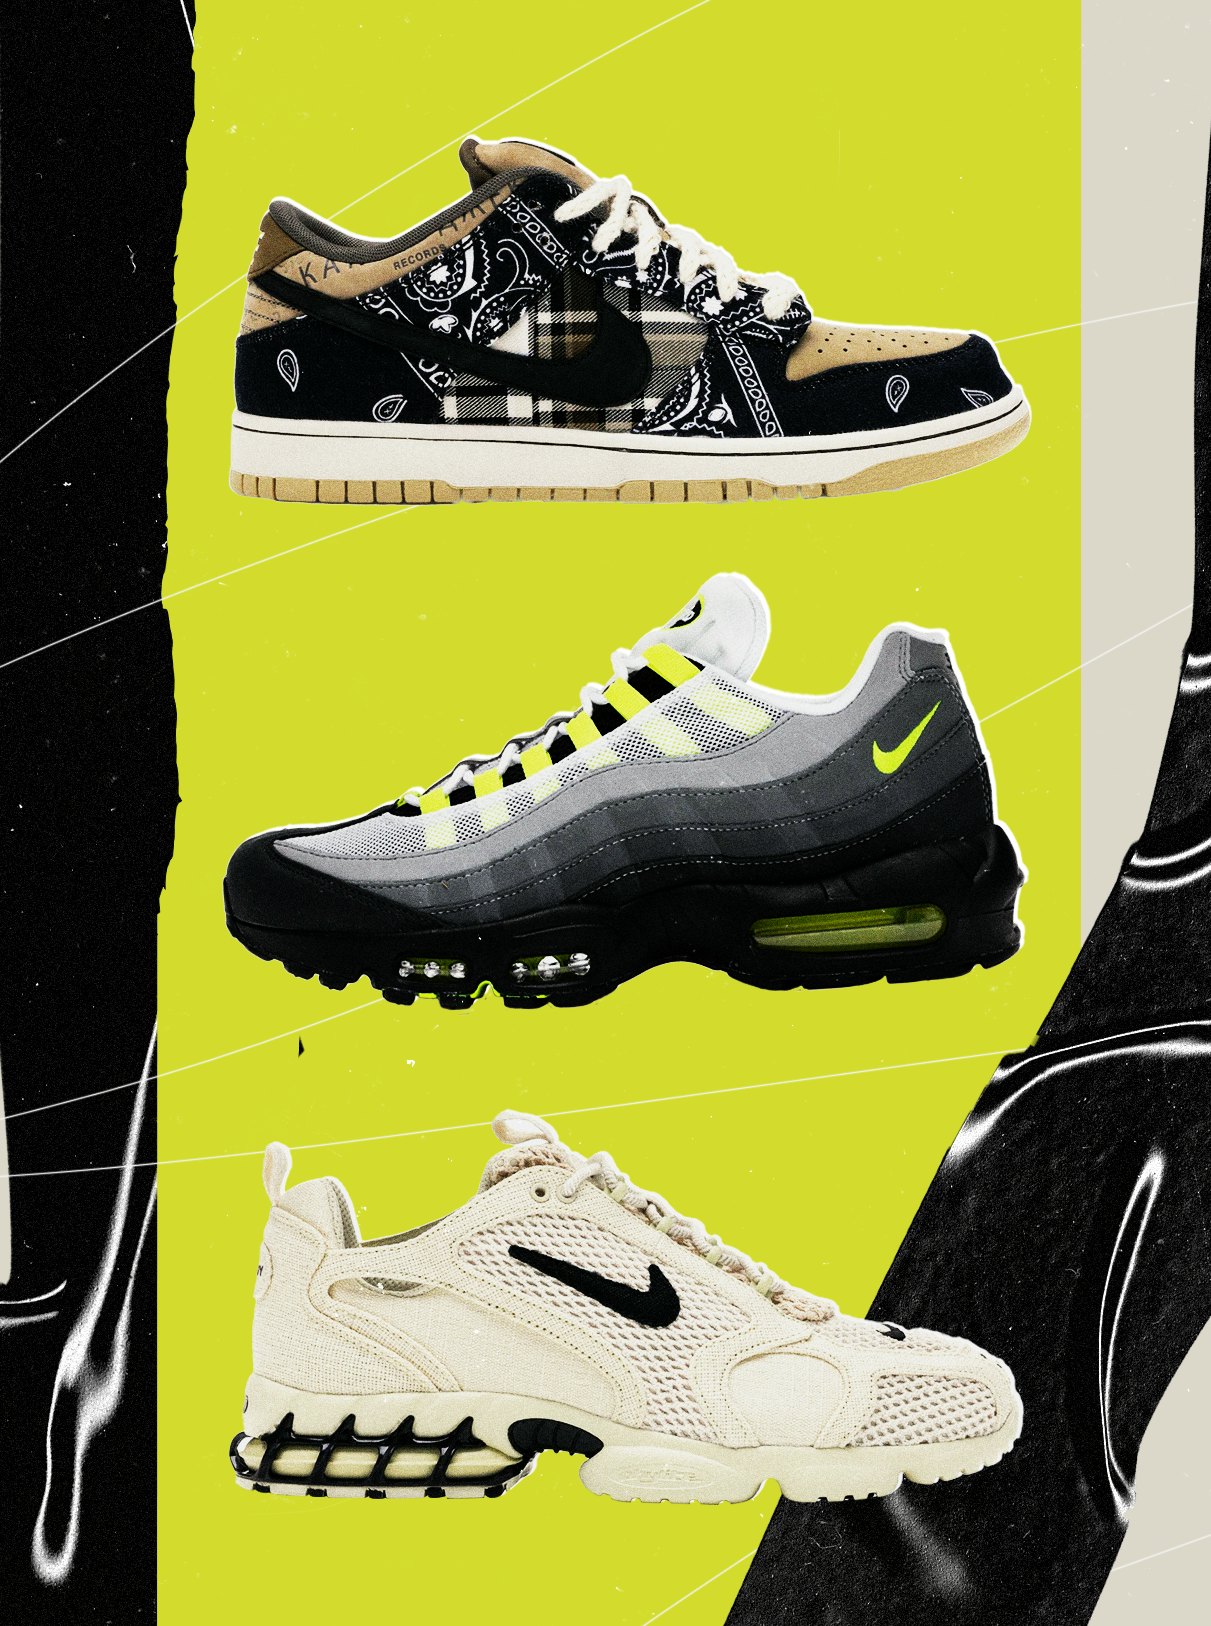 sneakers released in 2020